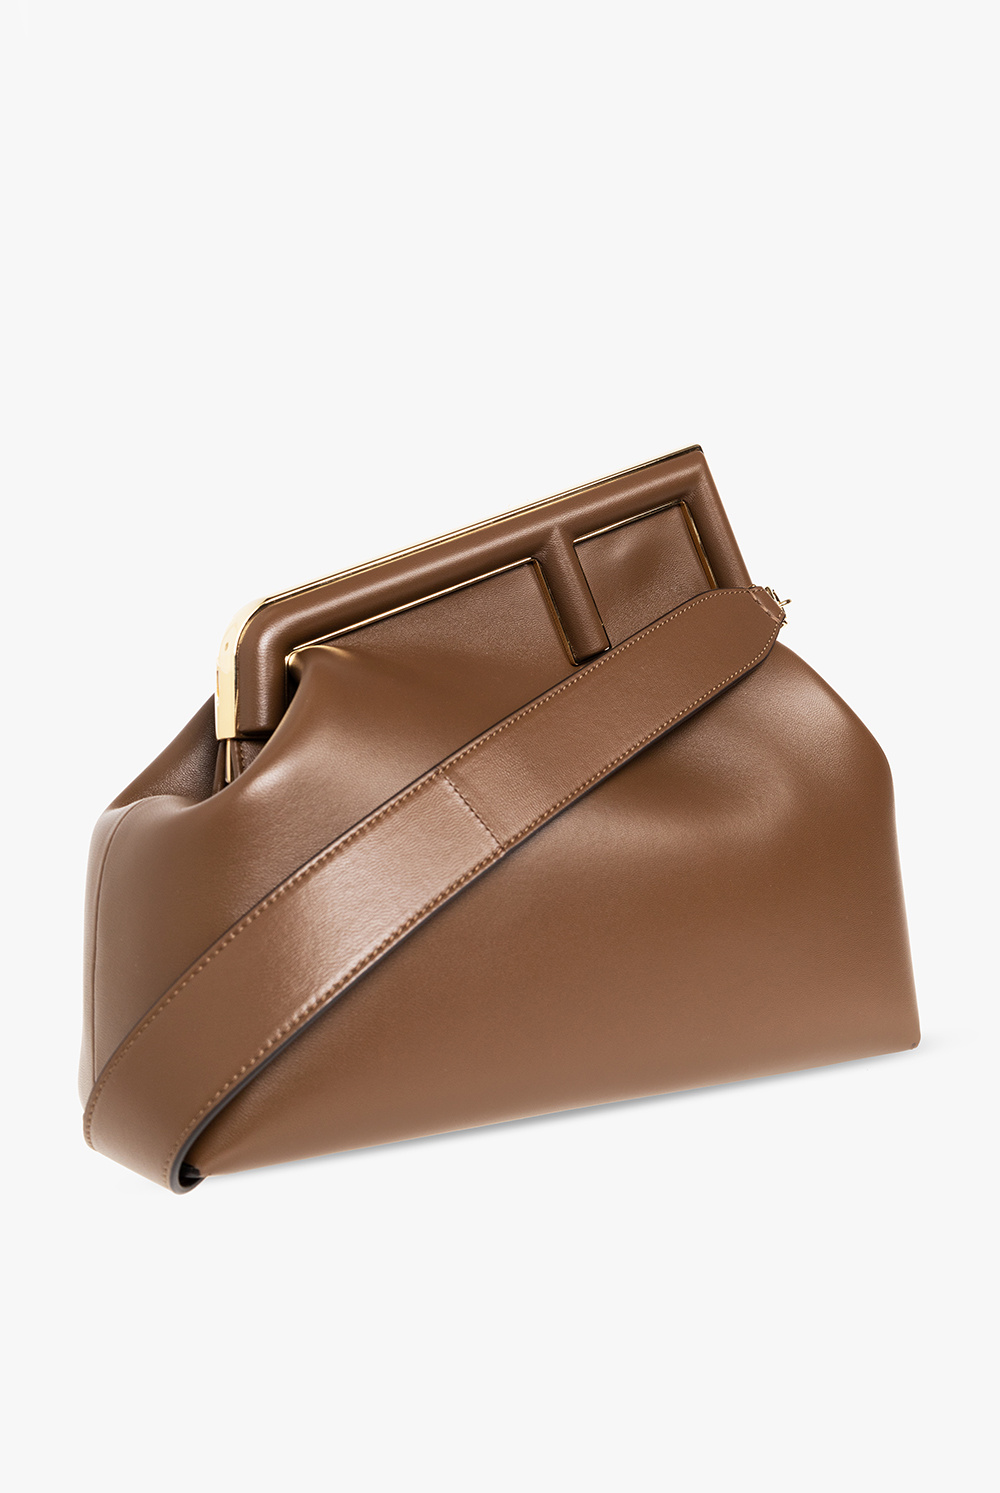 Fendi First Medium Leather Shoulder Bag Women's Brown